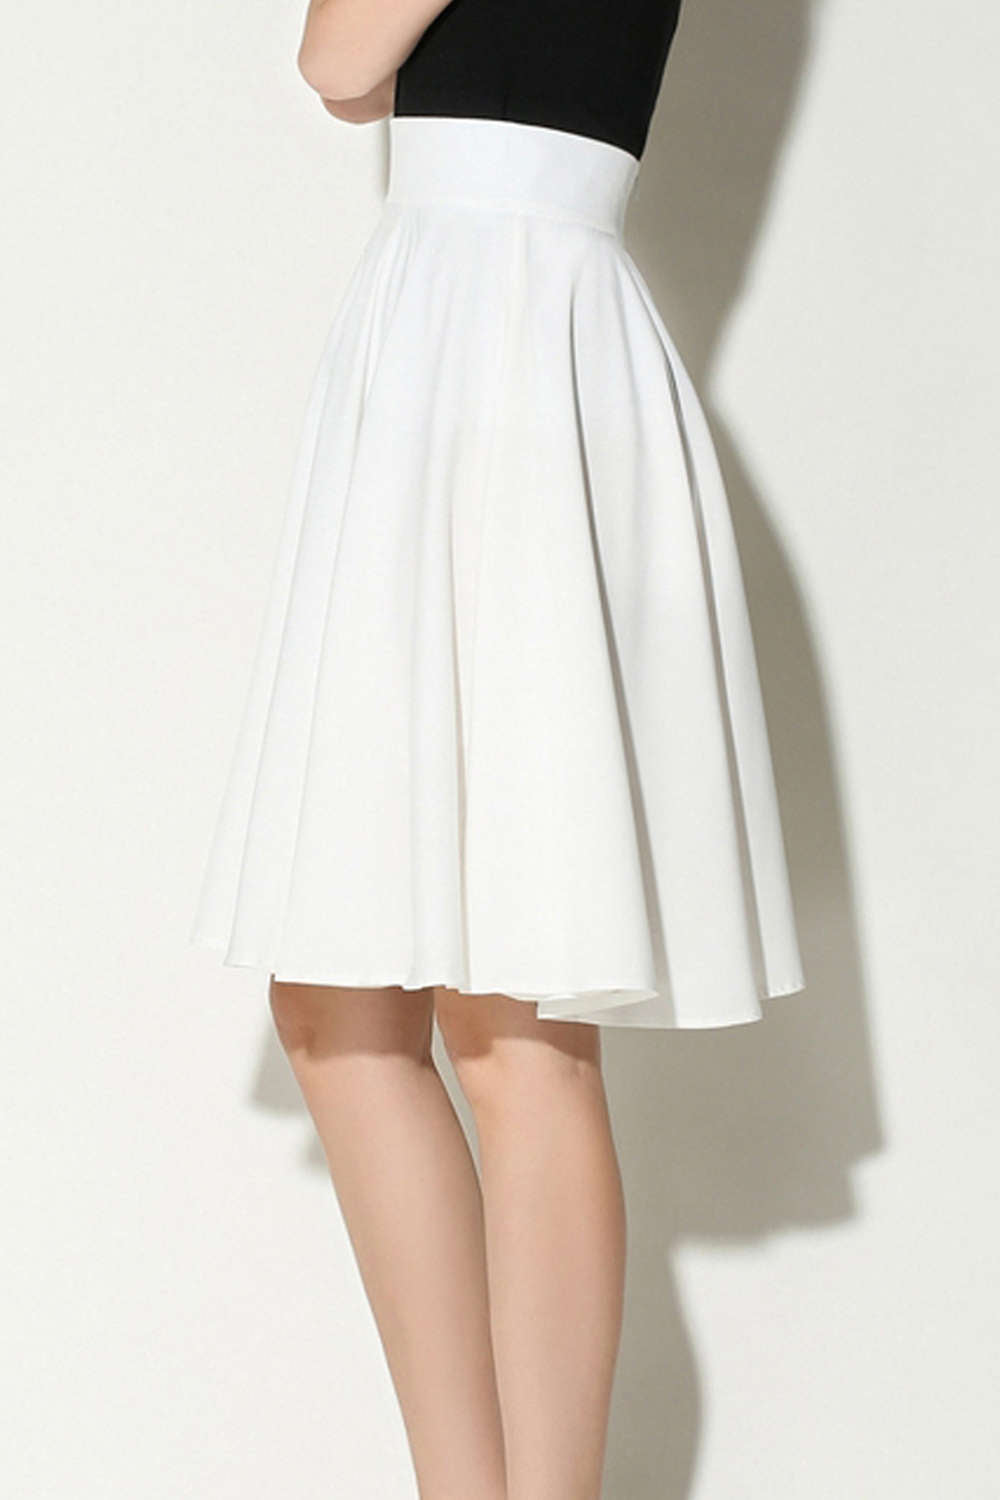 Iyasson High Waist A Line Skirt 